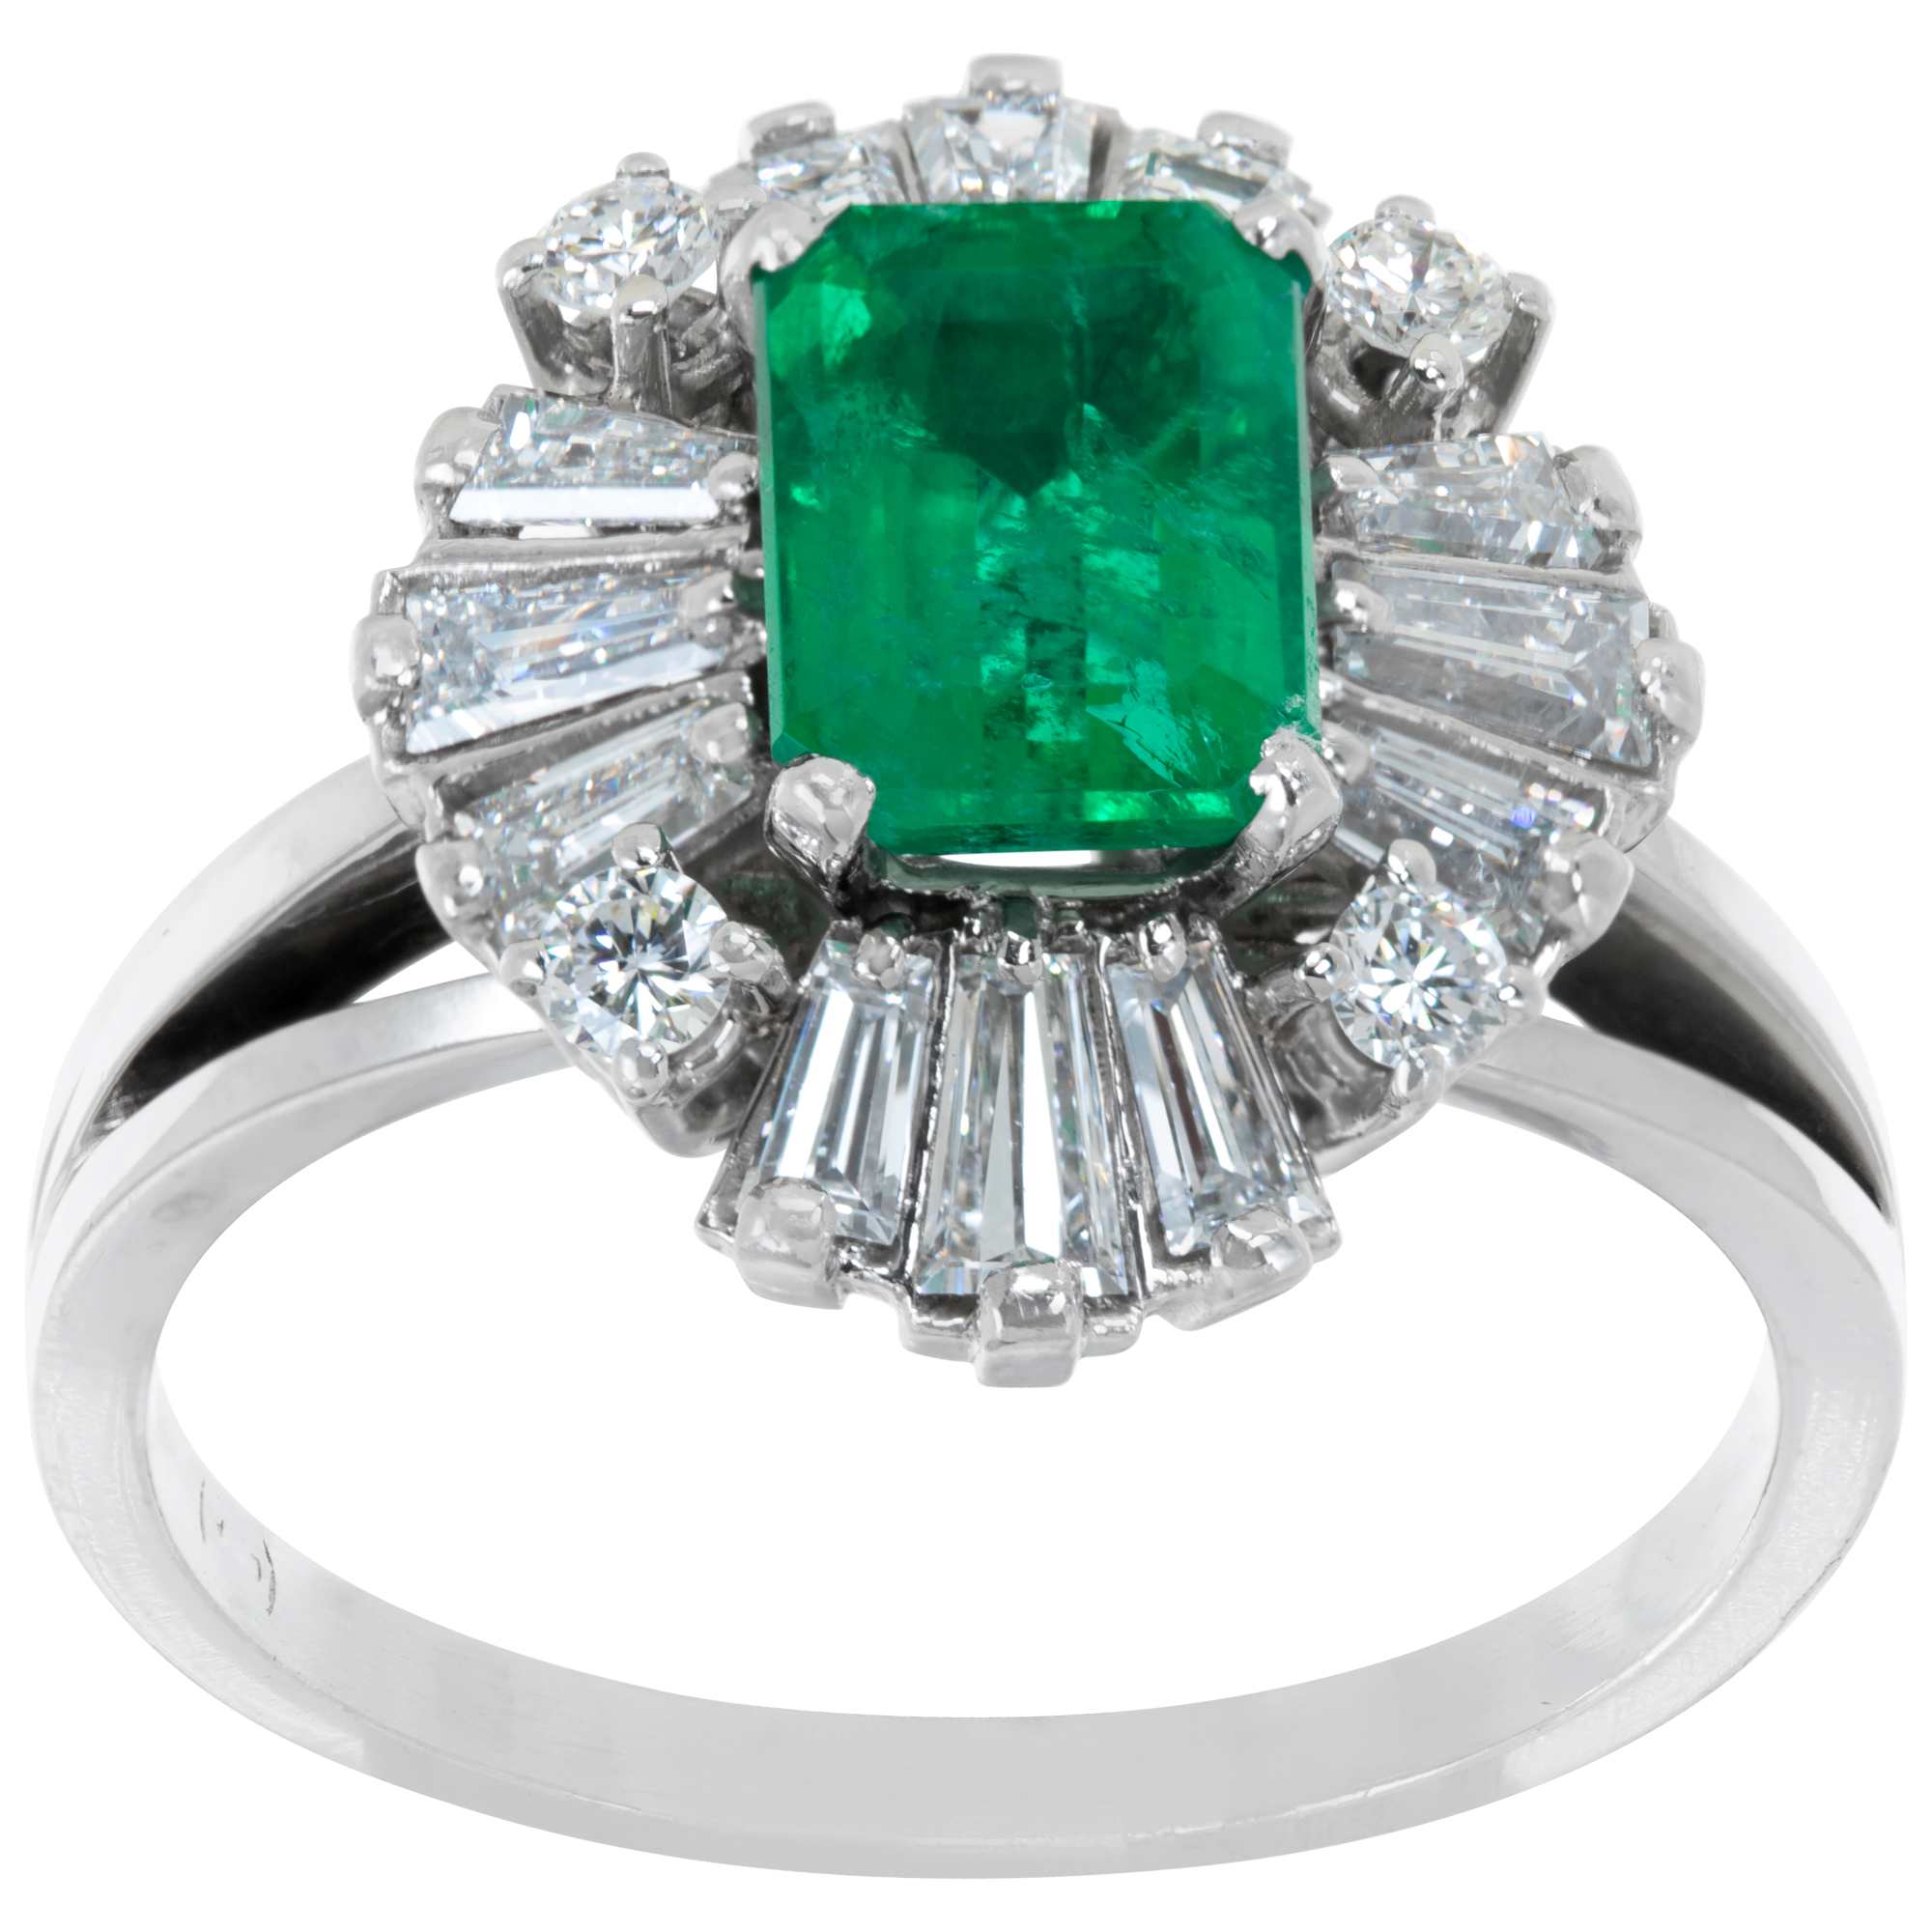 Emerald cut Emerald Ballerina ring with baguettes & round brilliant cut diamonds in 18k white gold